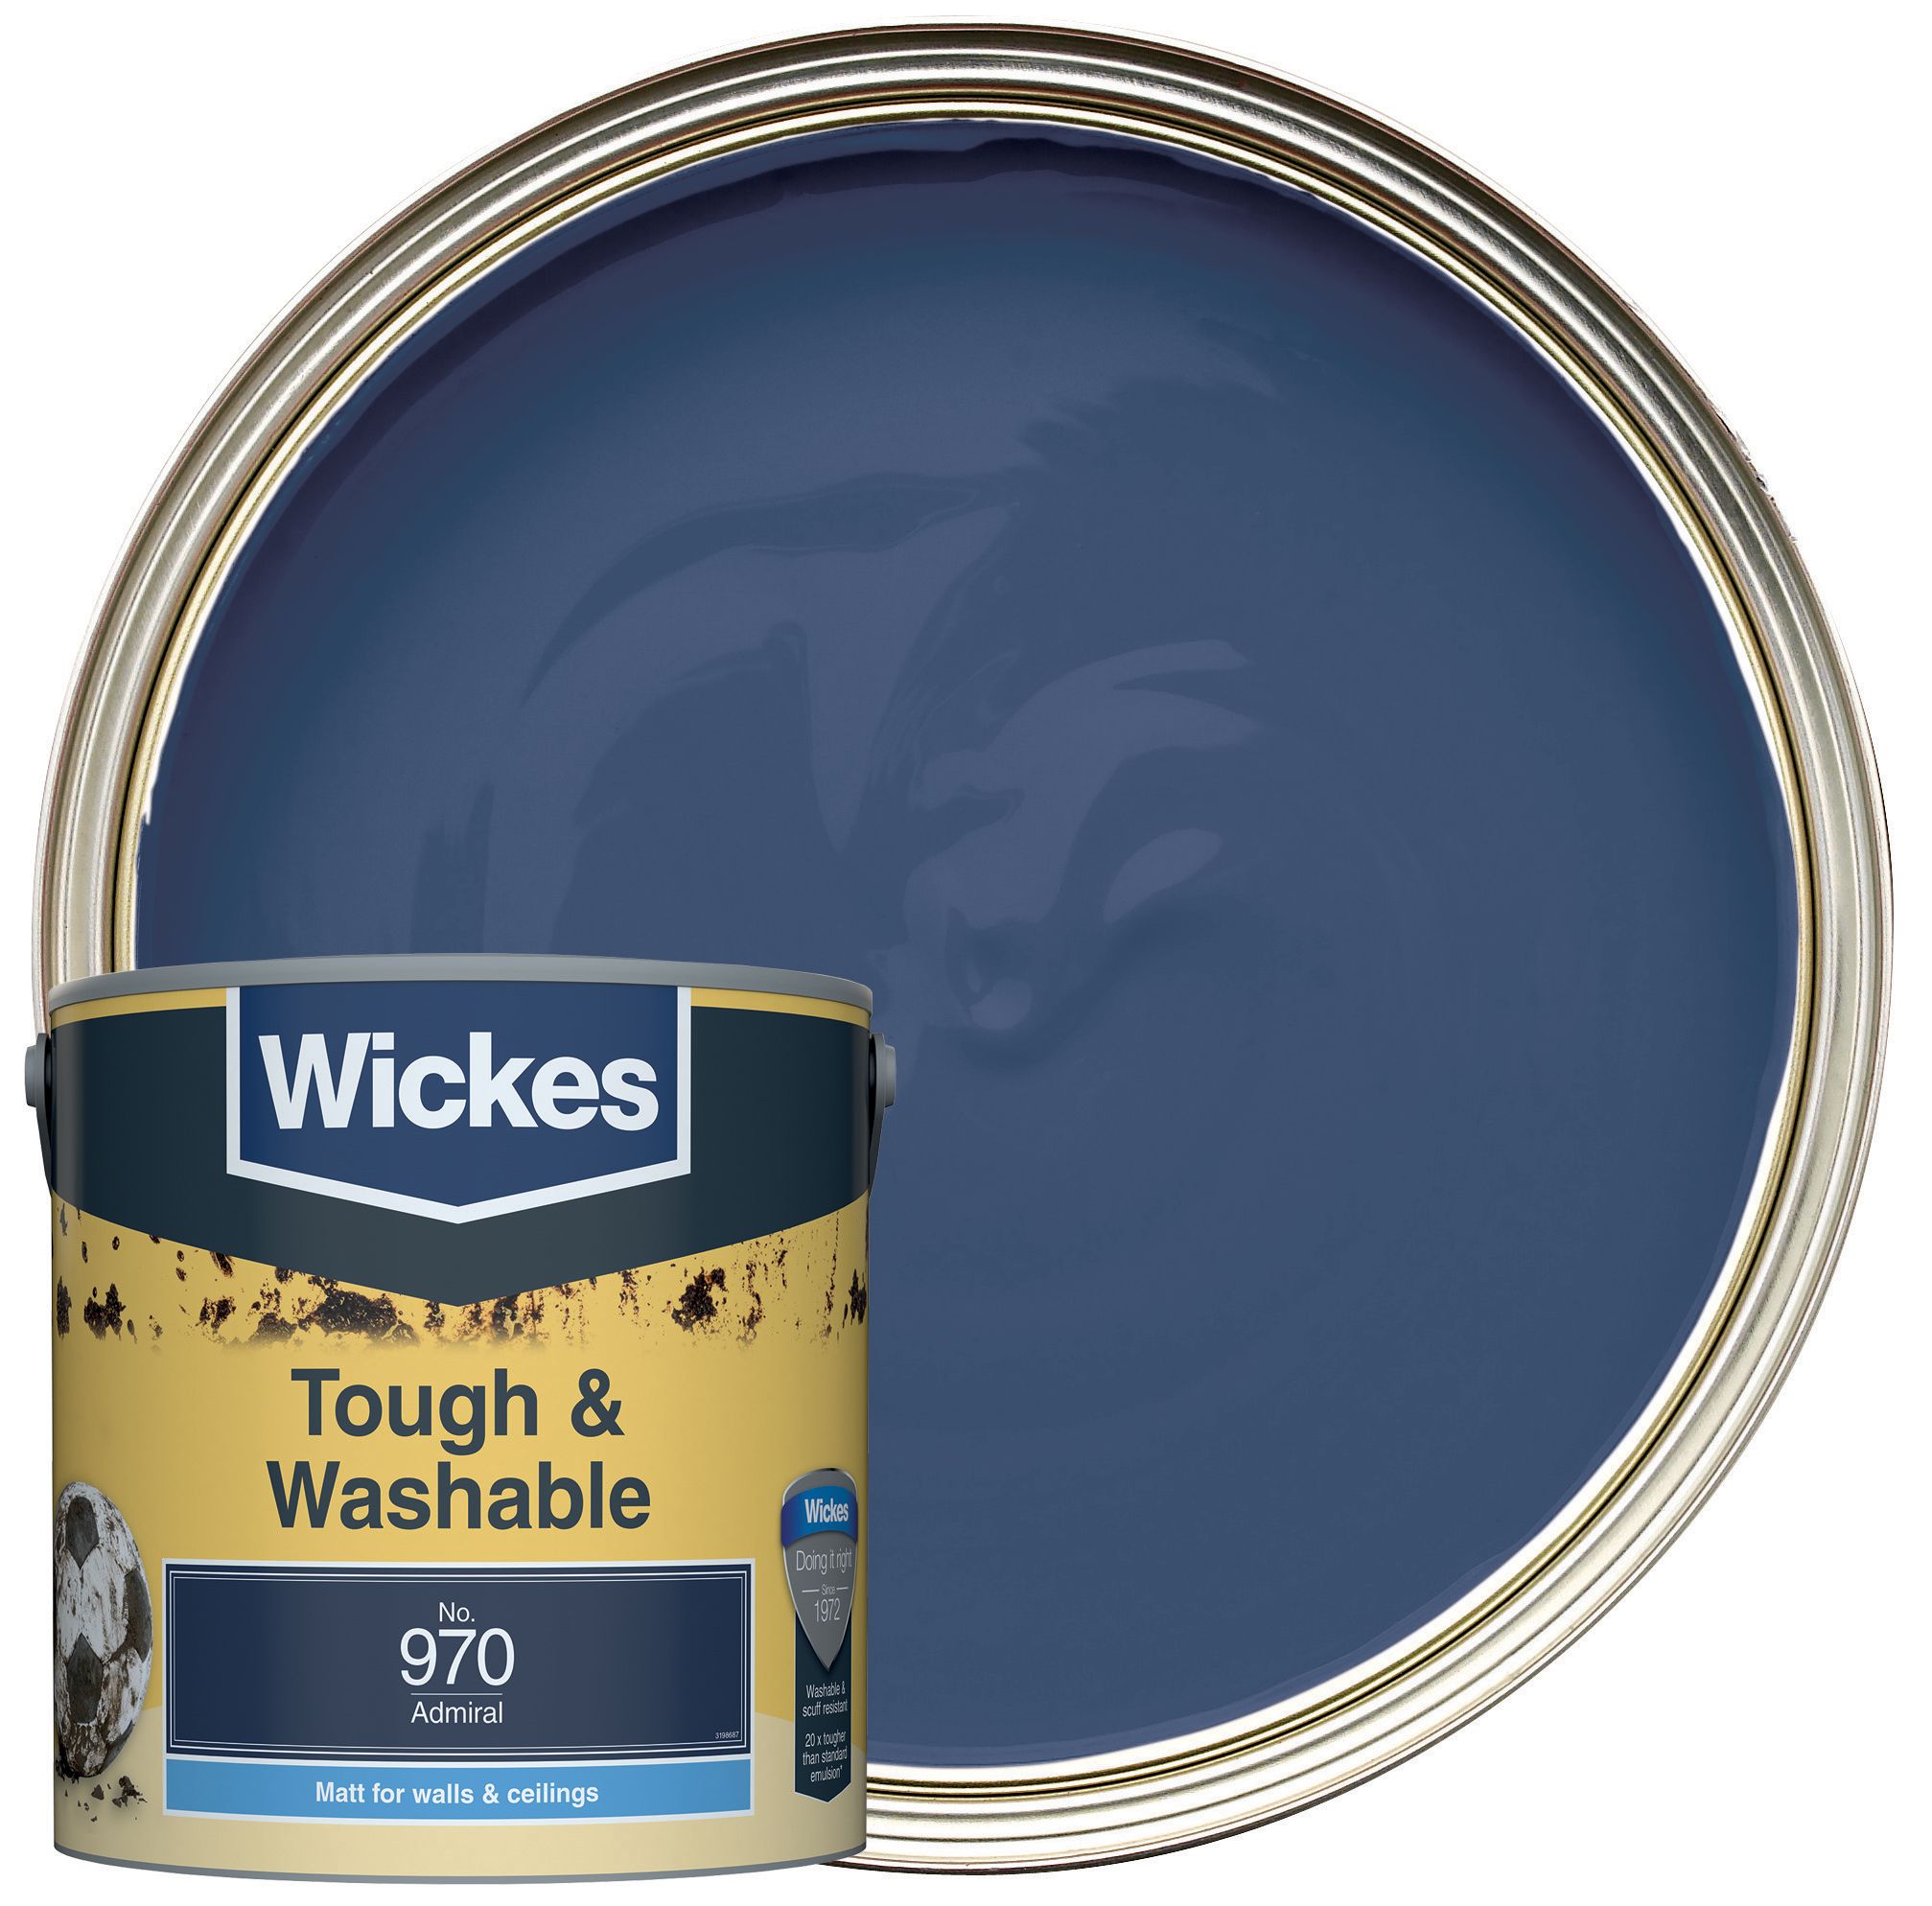 Wickes Tough & Washable Matt Emulsion Paint - Admiral No.970 - 2.5L